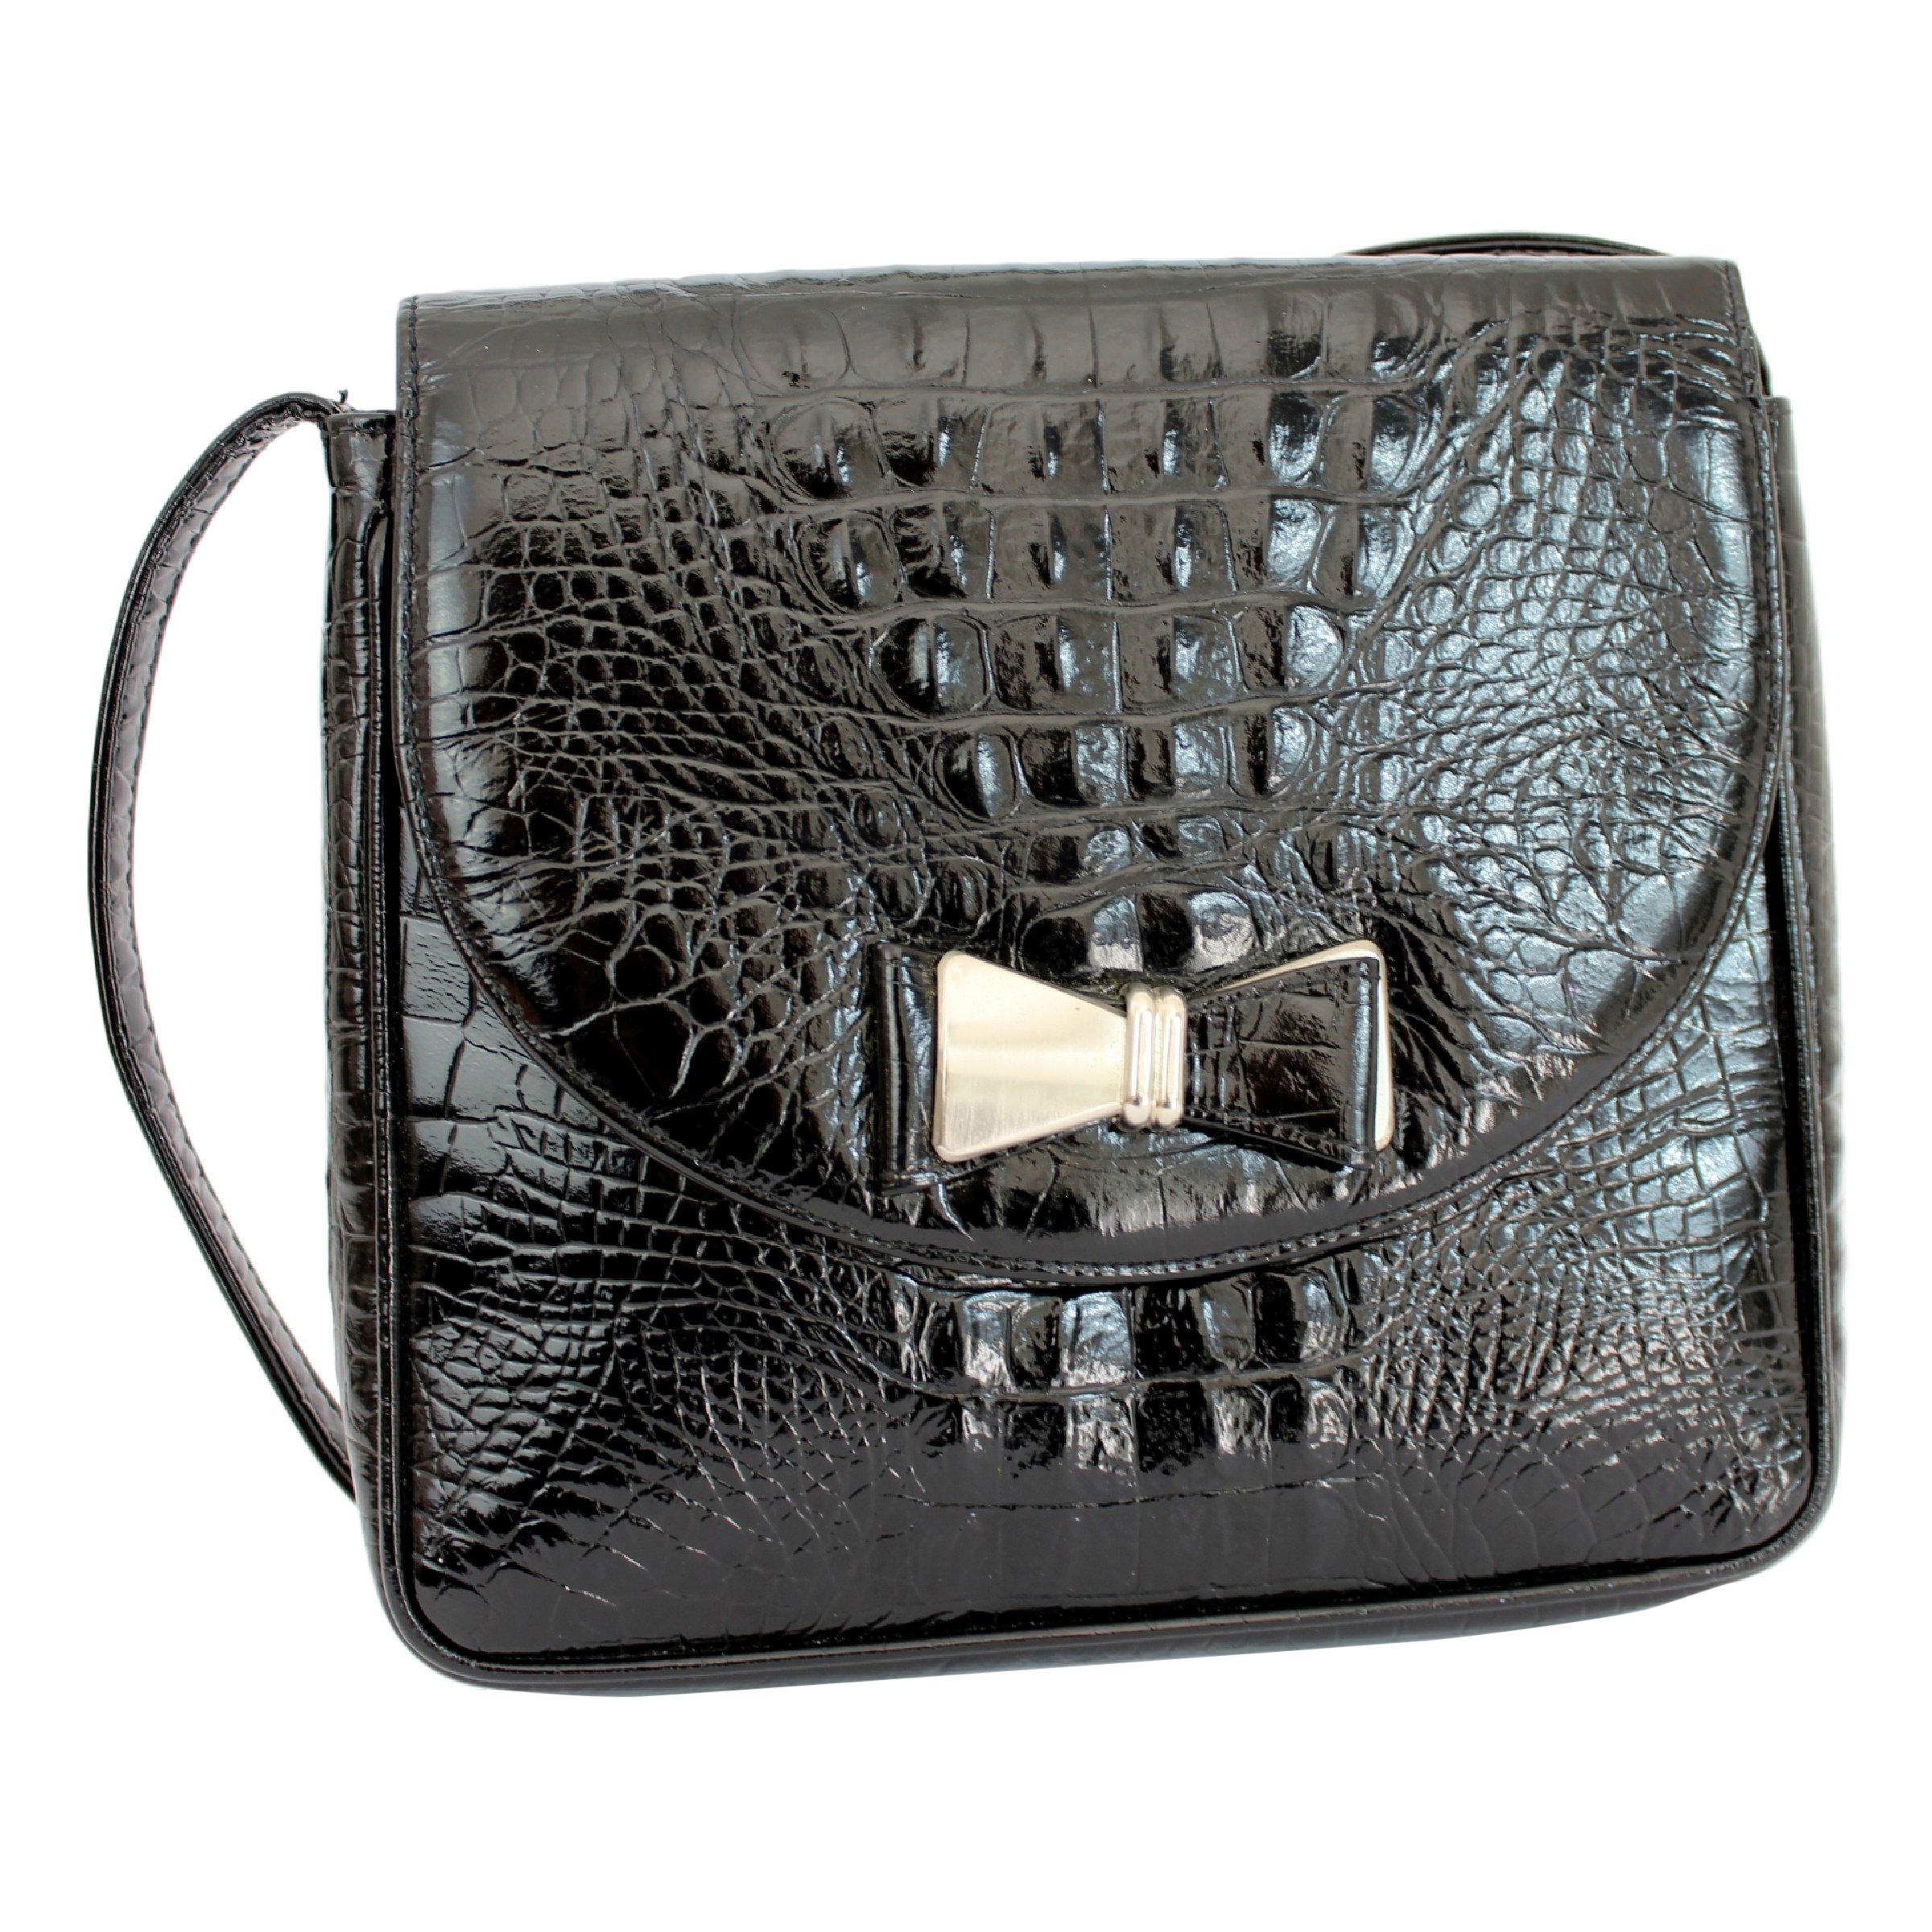 1990s Gianni Versace Couture Black Leather Crocodile Print Vintage Shoulder Bag